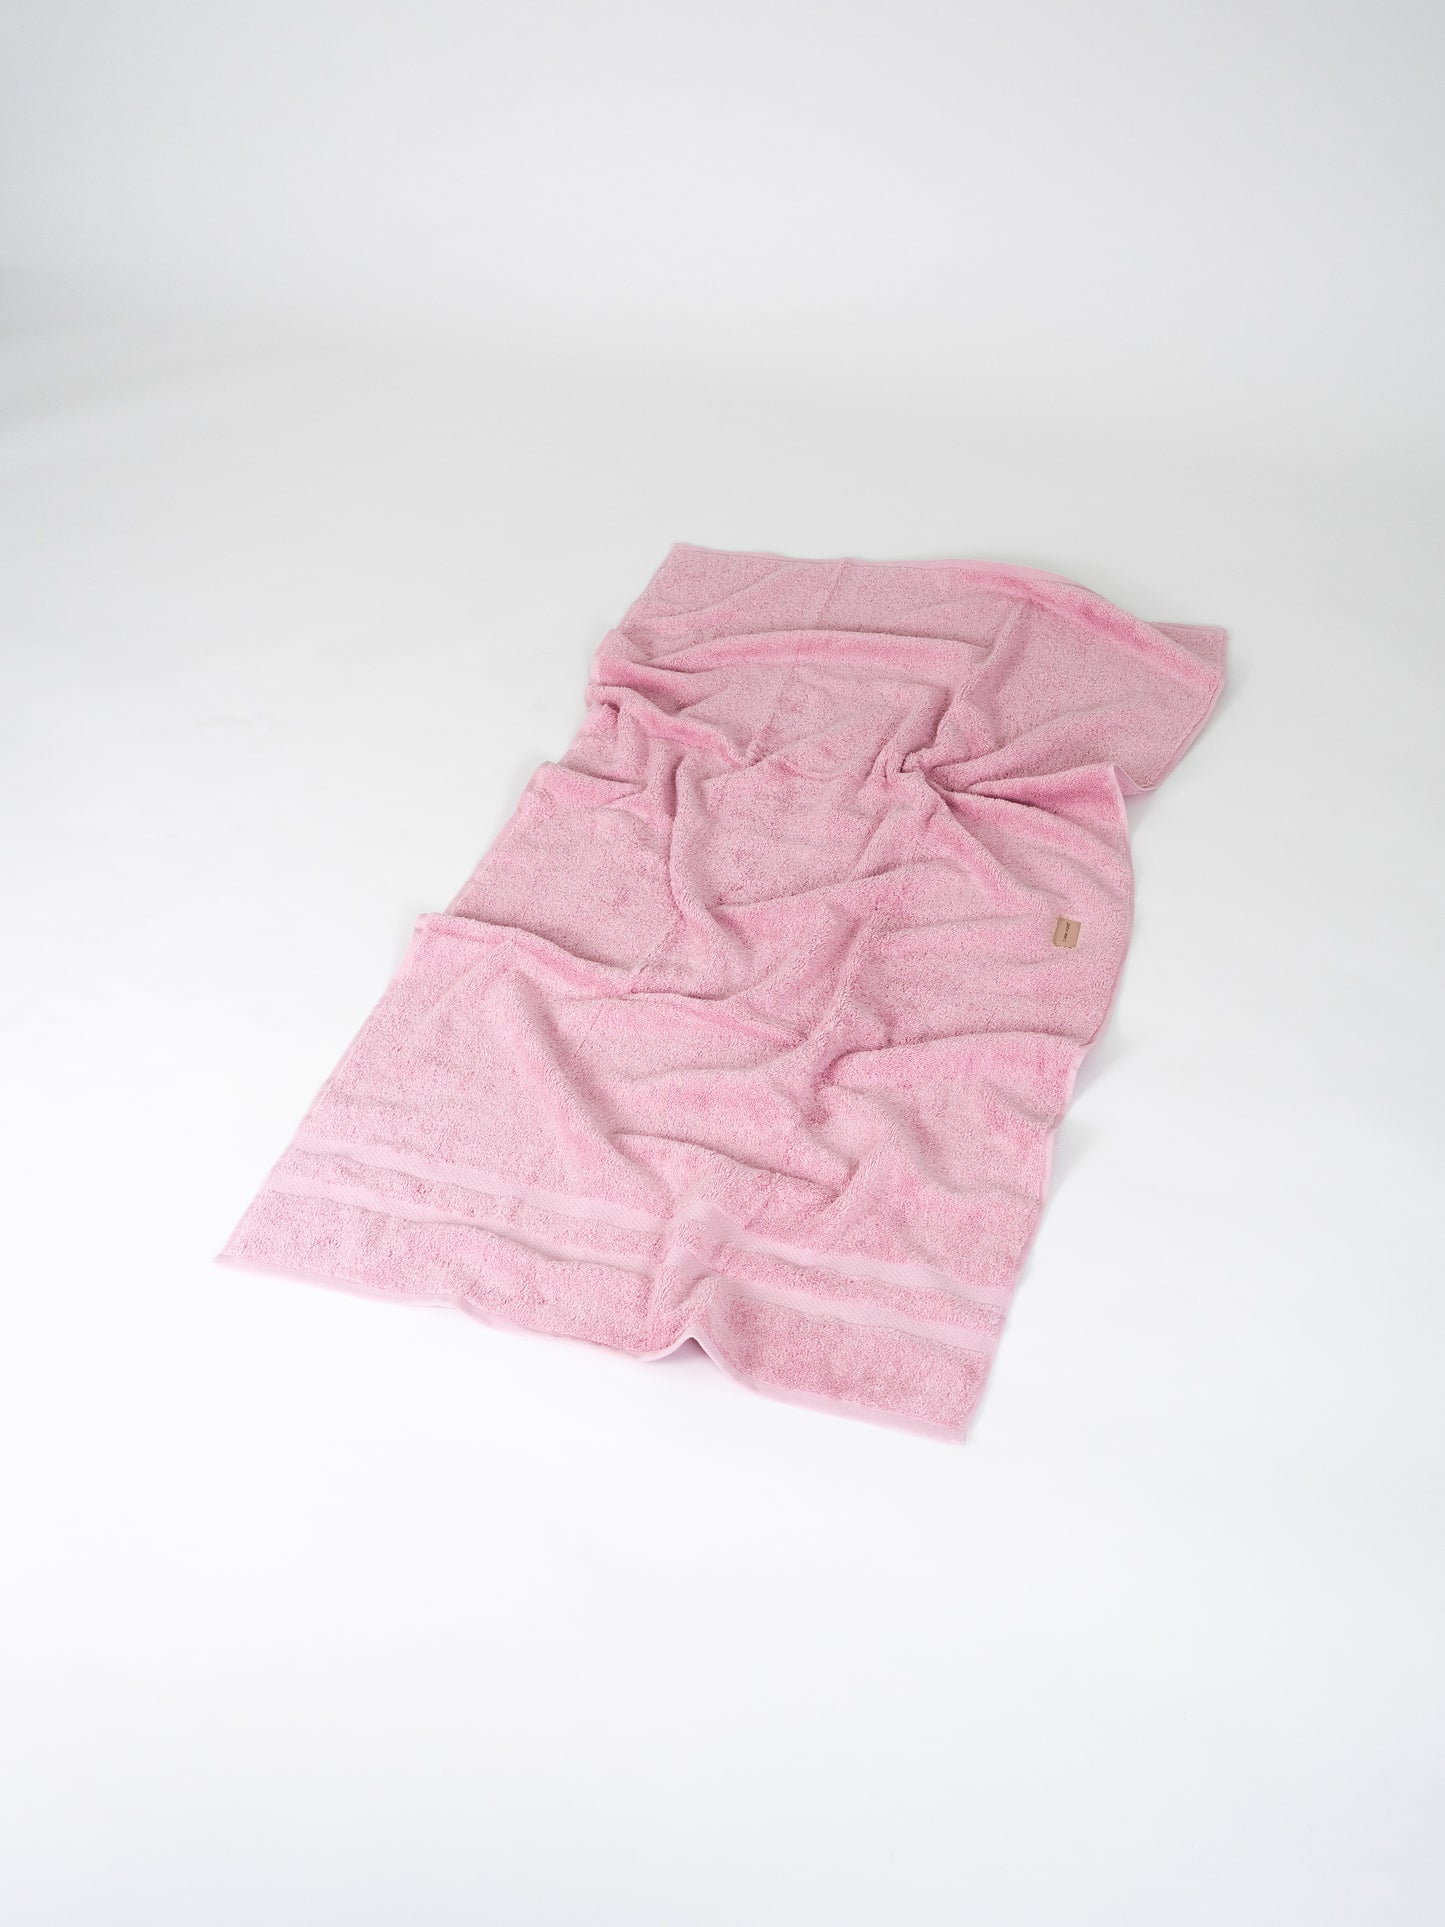 Rosa Handdukar set 8-pack - Soft Pink